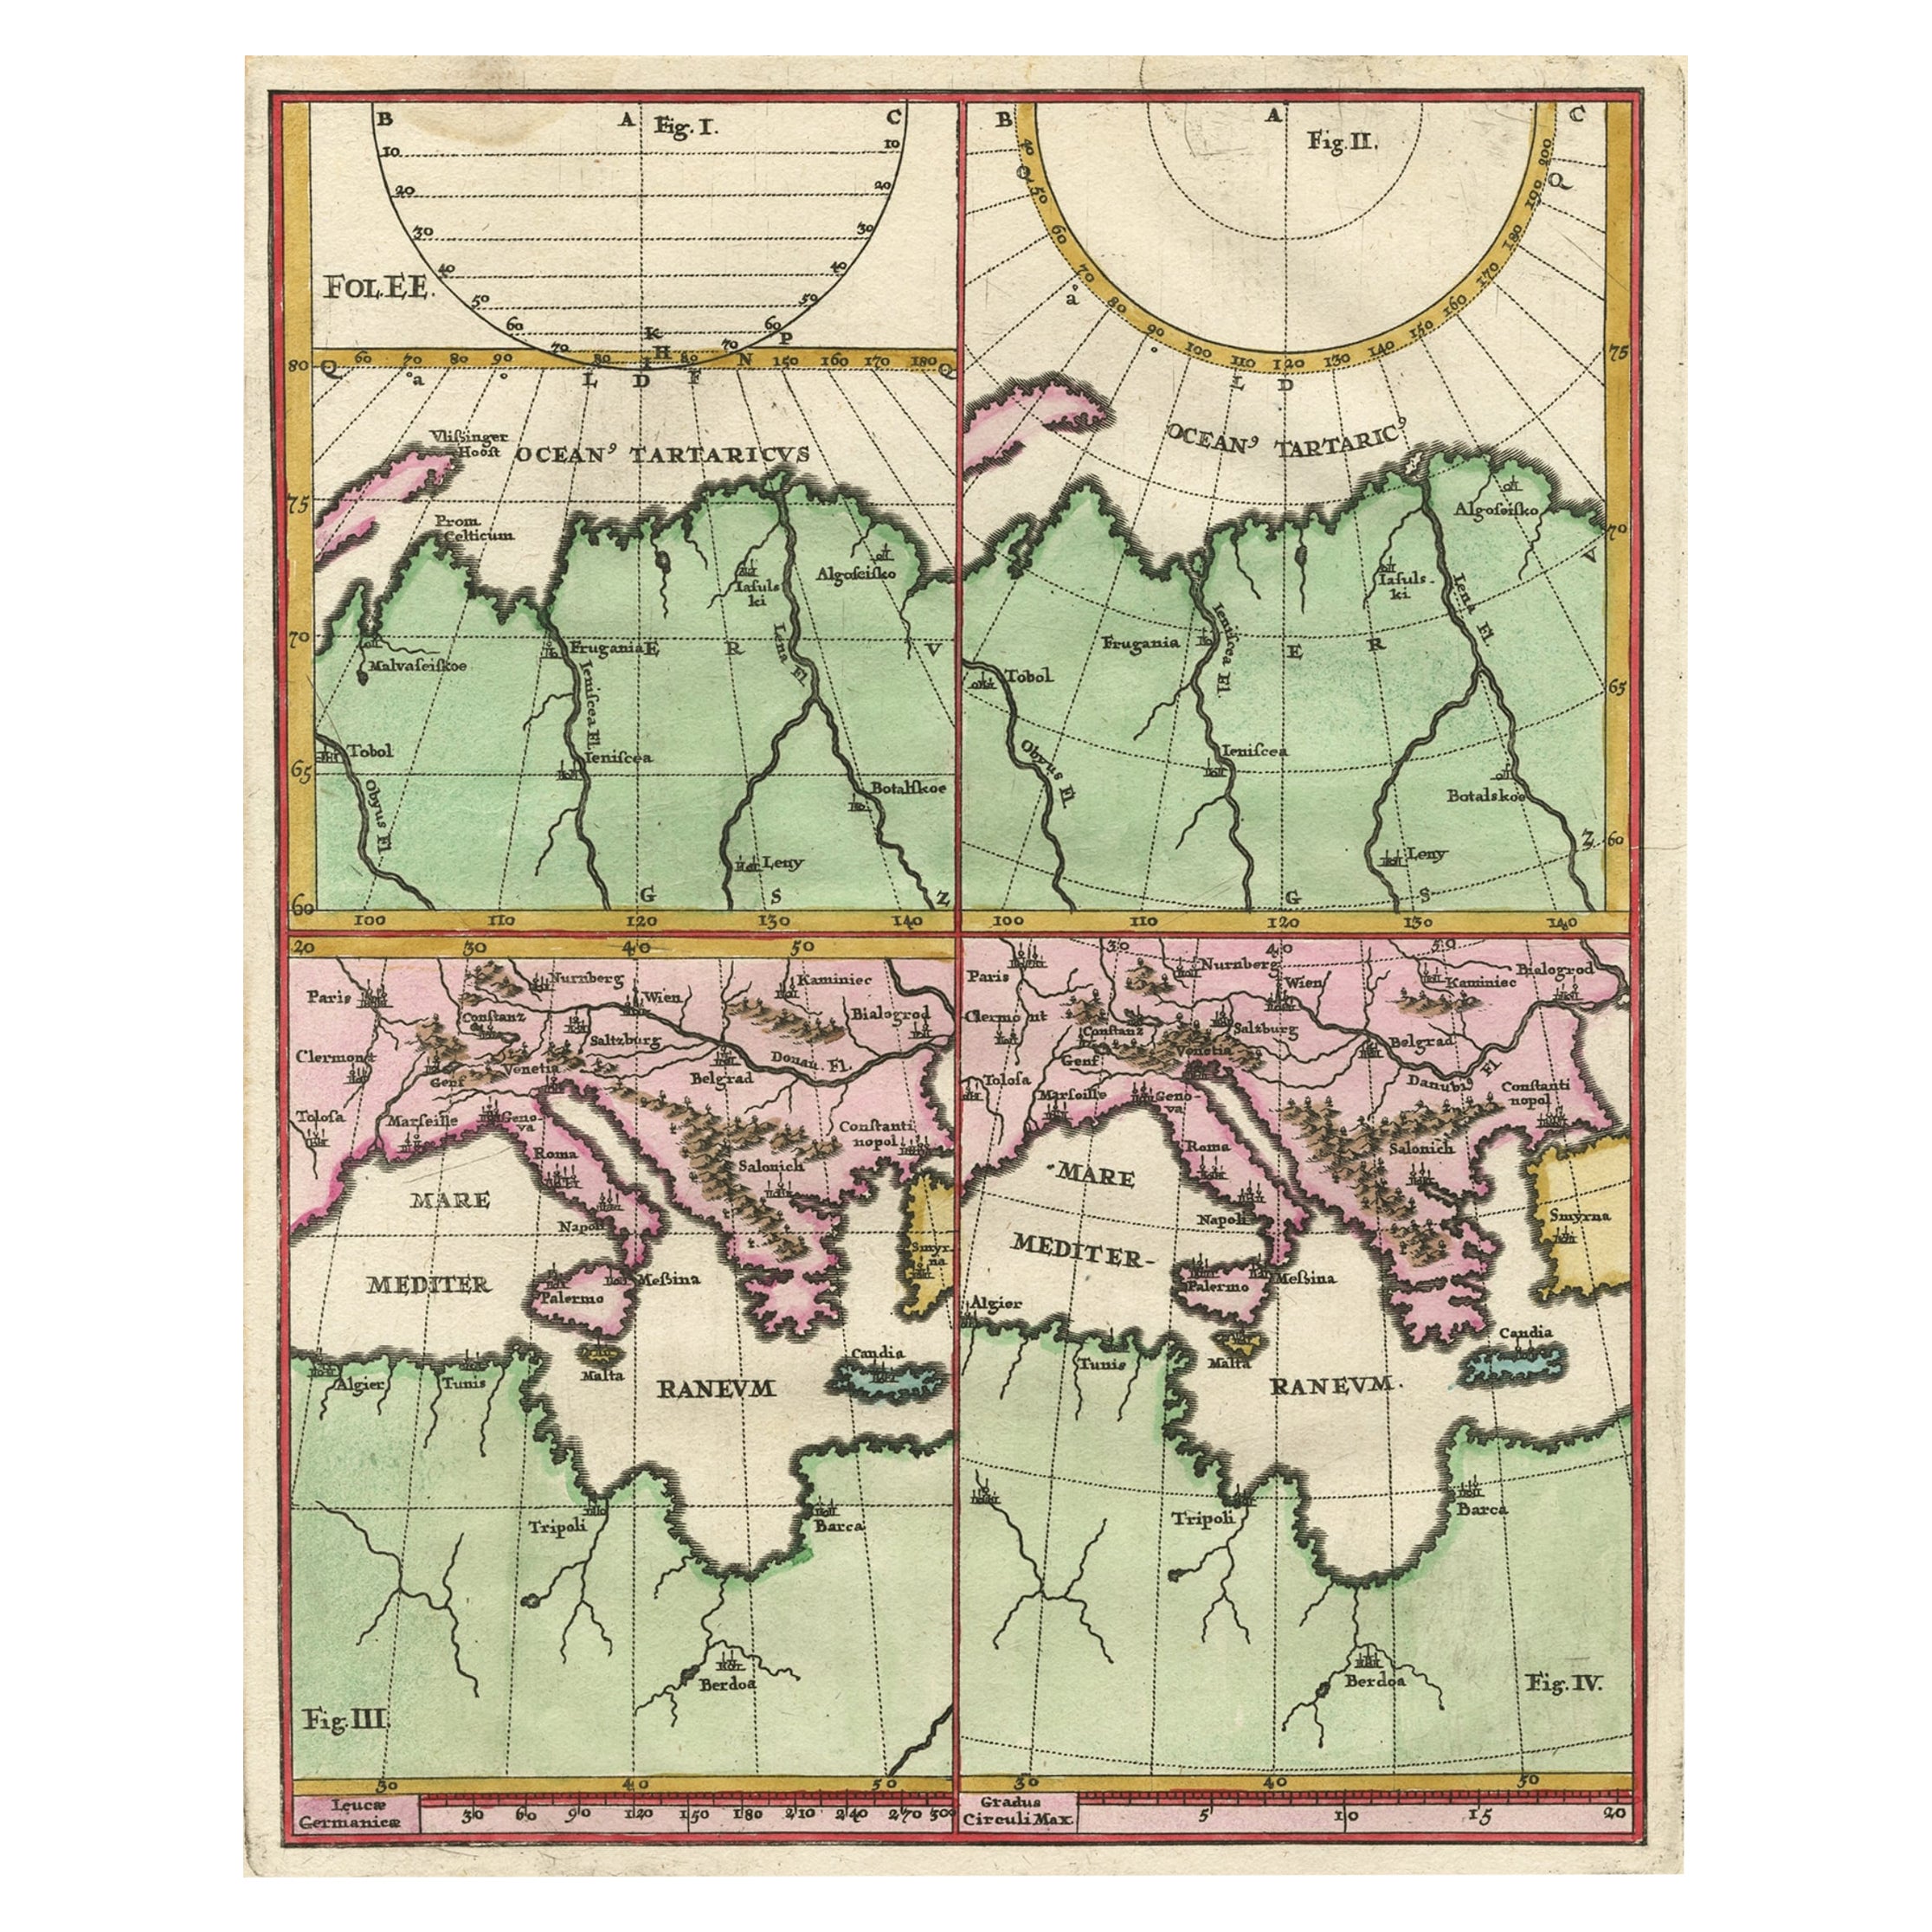 Kuriose Karte der Laptewsee und des Mittelmeers, ca. 1700